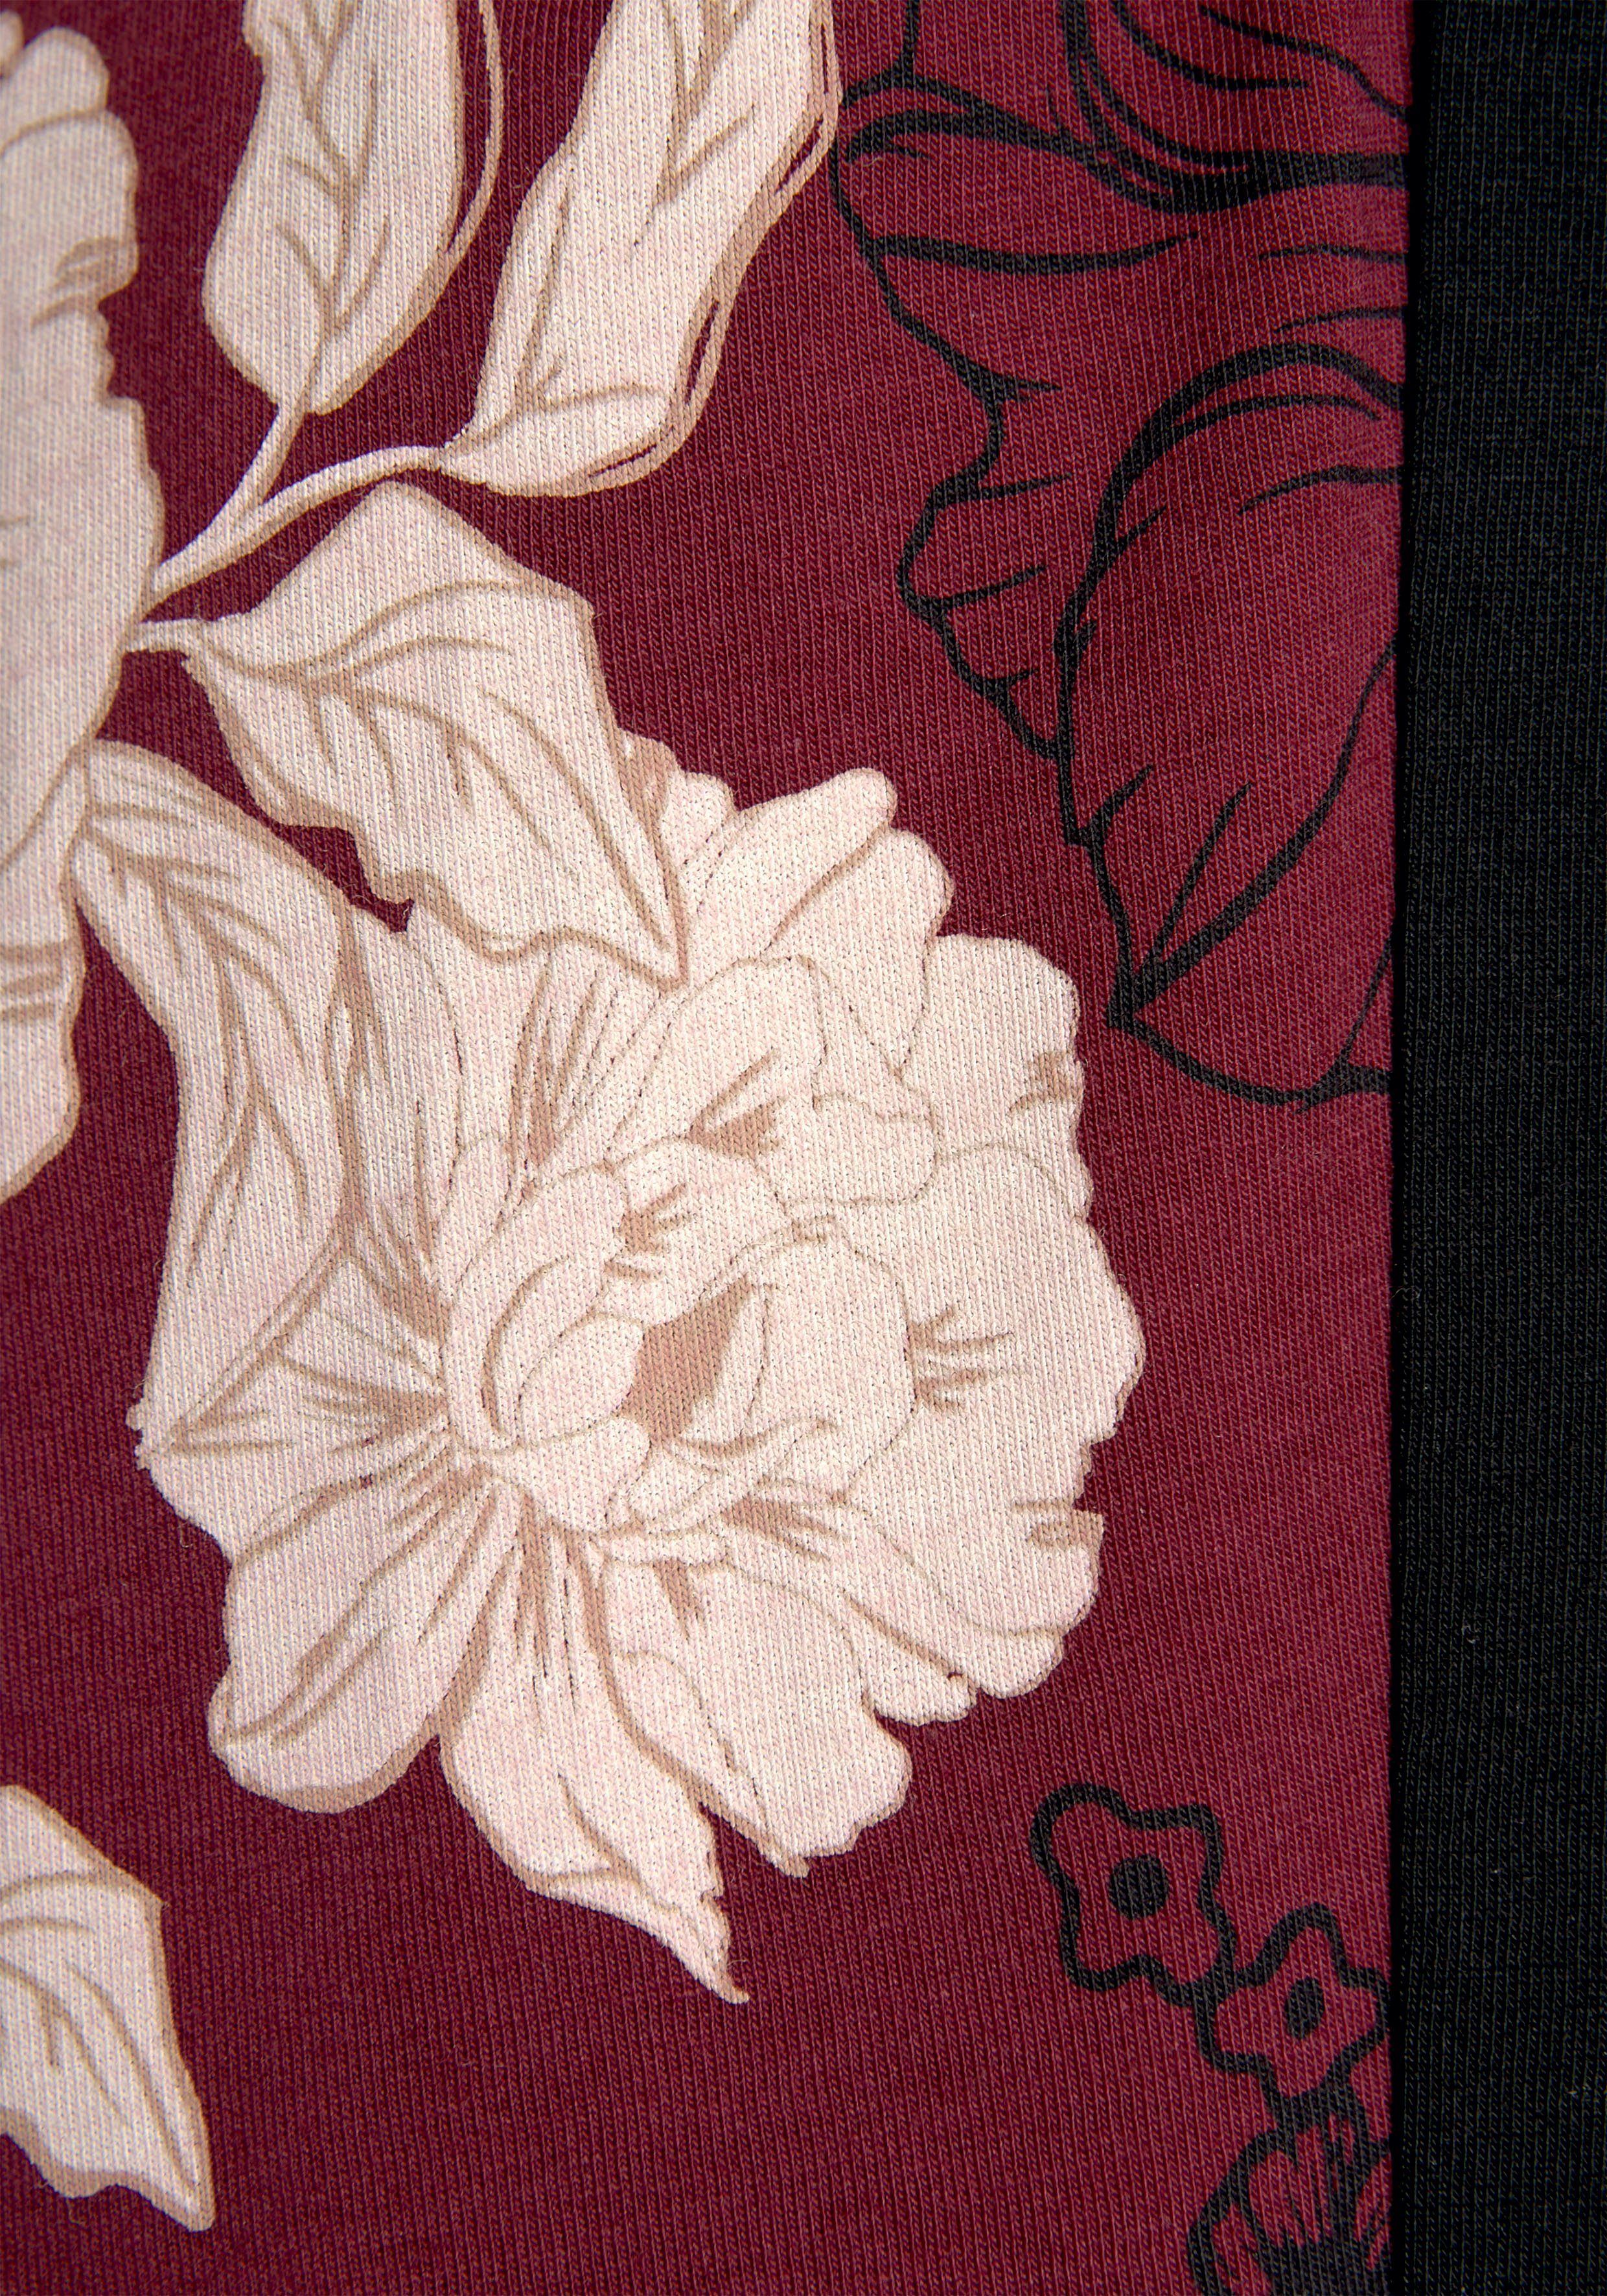 Gürtel, Blumen-Dessin mit Kurzform, s.Oliver bordeaux-schwarz Baumwoll-Mix, Kimono,